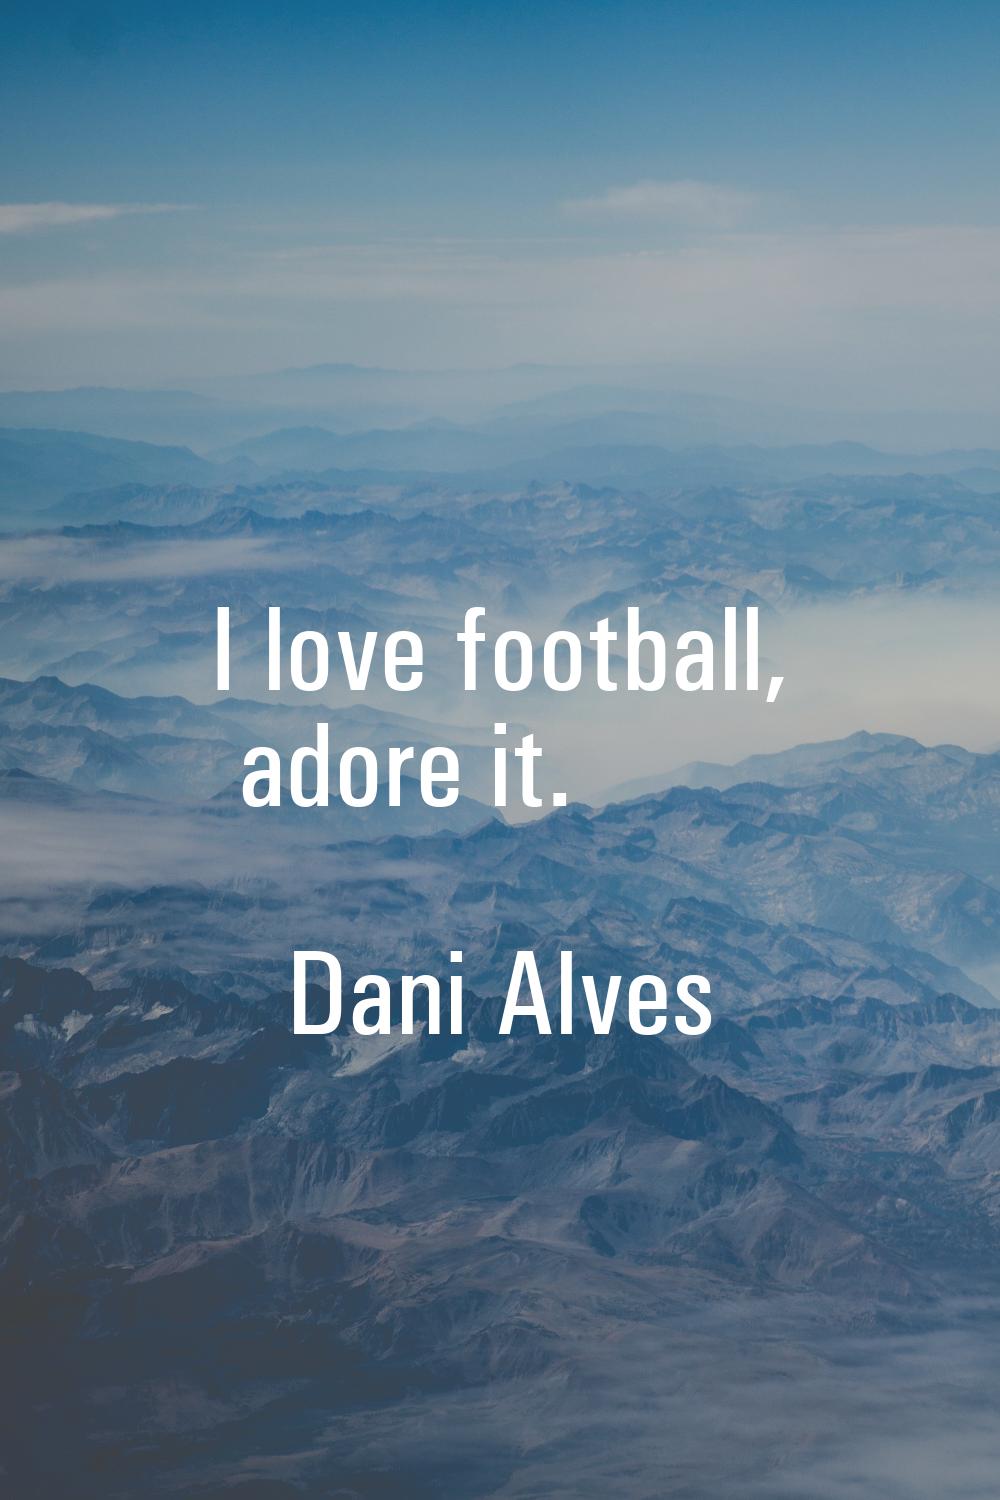 I love football, adore it.